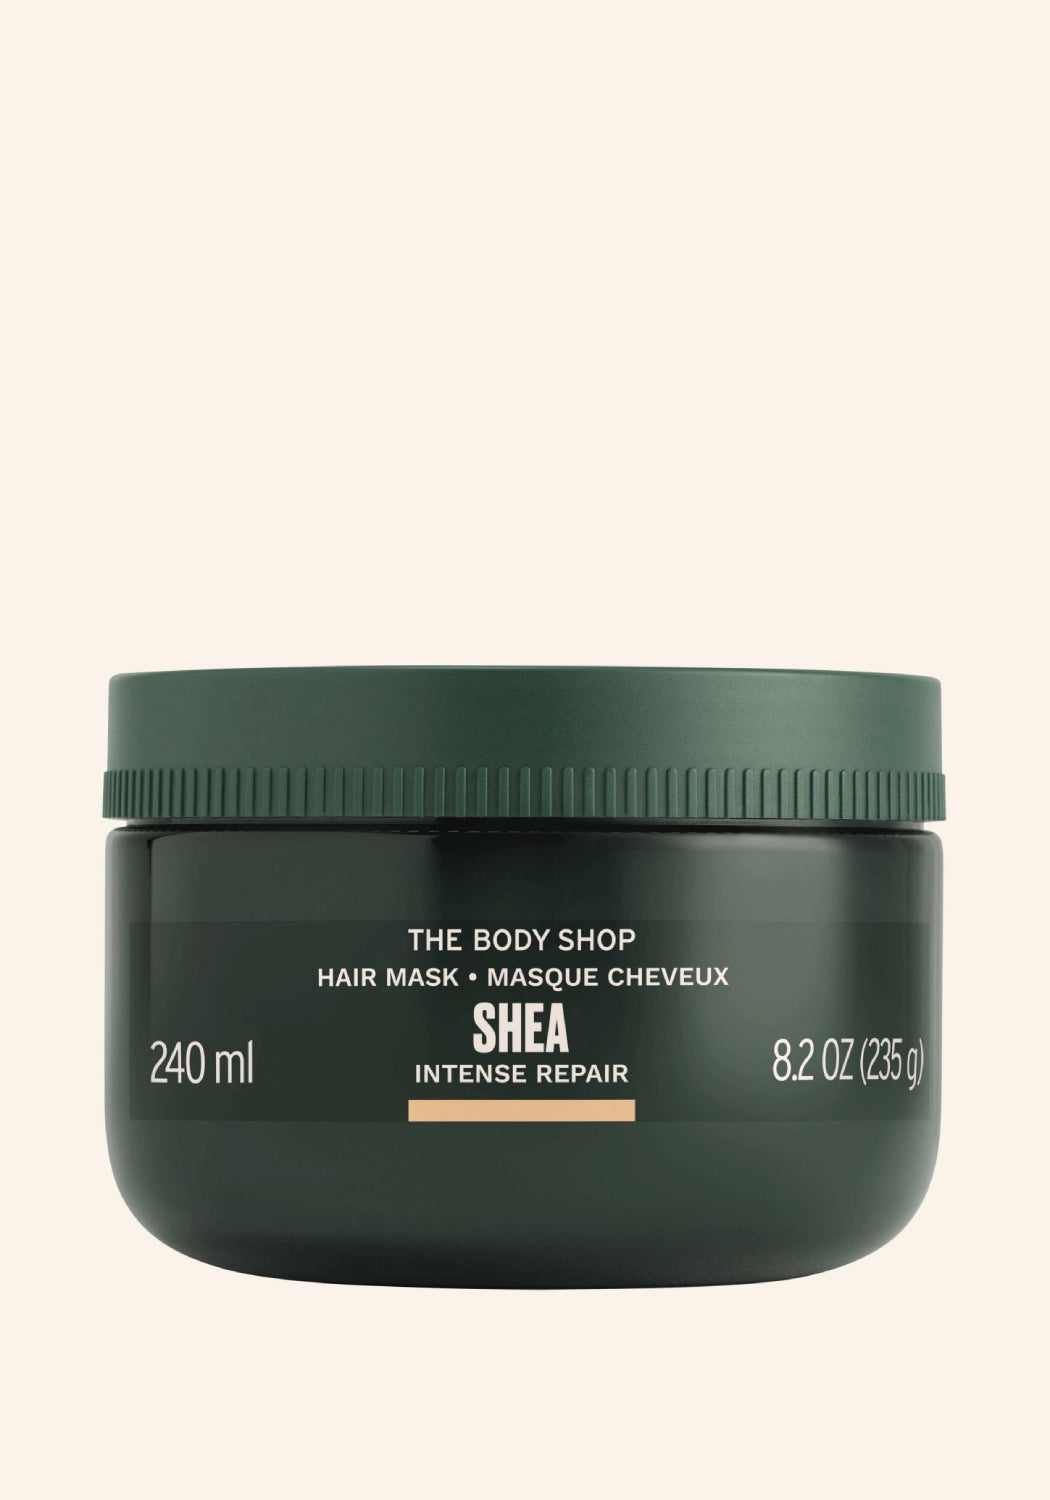 The Body Shop Shea Intense Repair Hair Mask